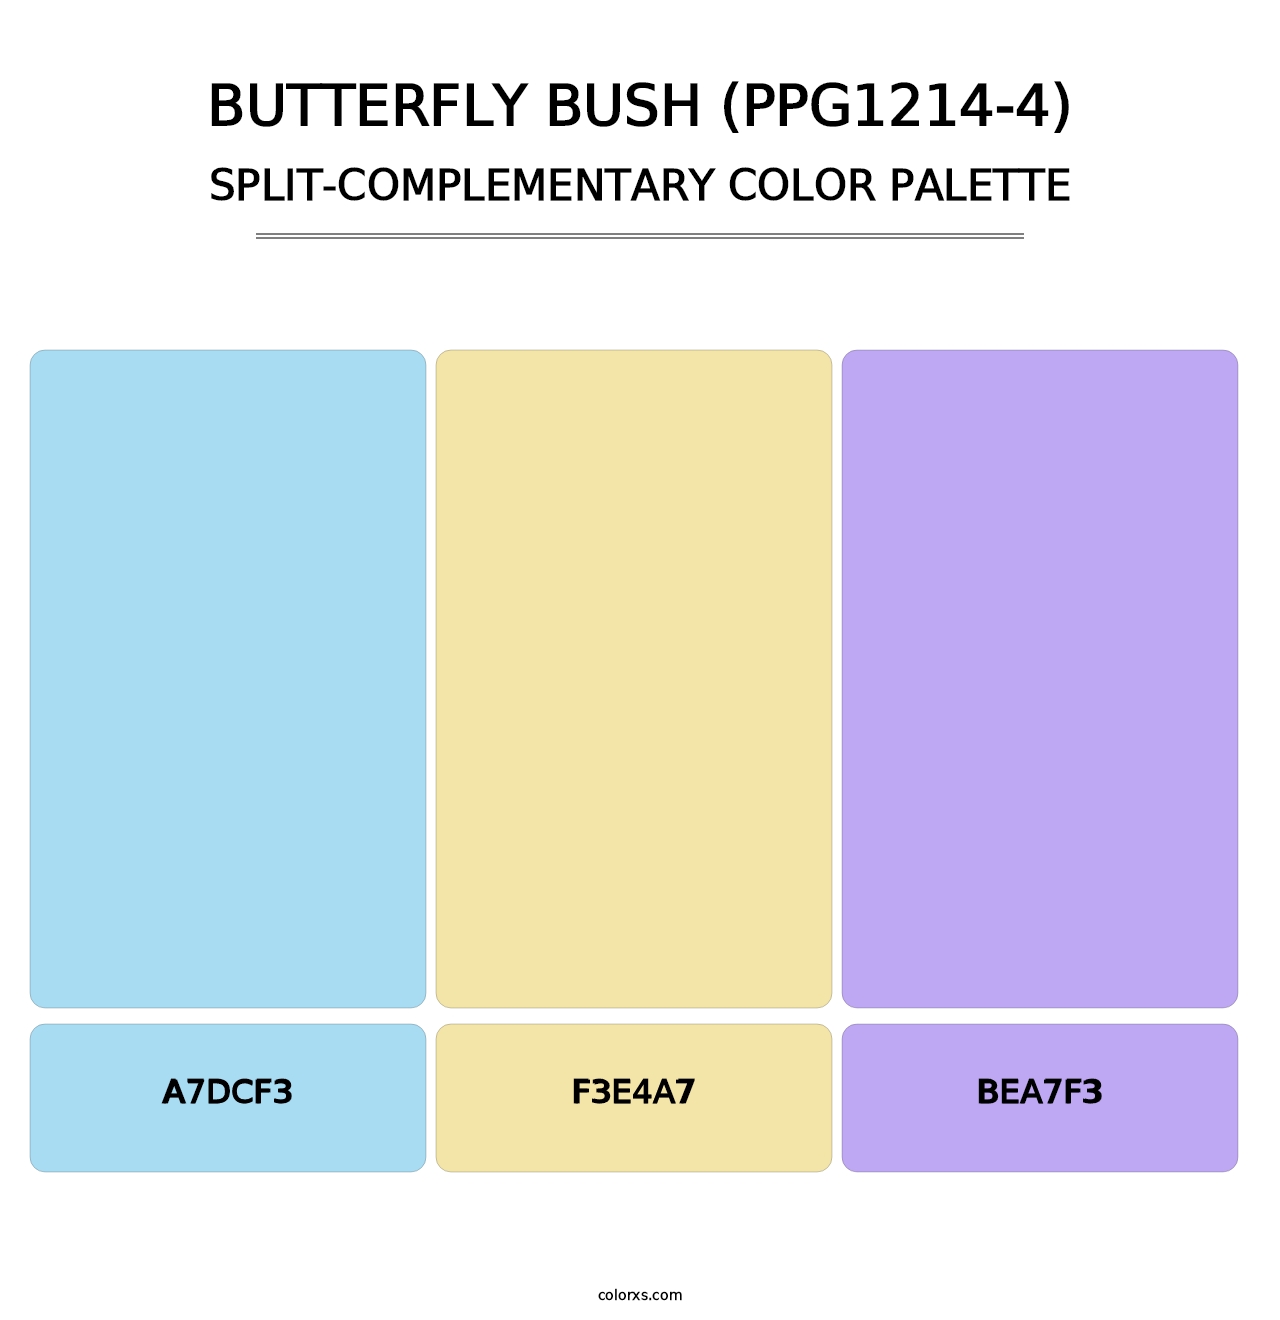 Butterfly Bush (PPG1214-4) - Split-Complementary Color Palette